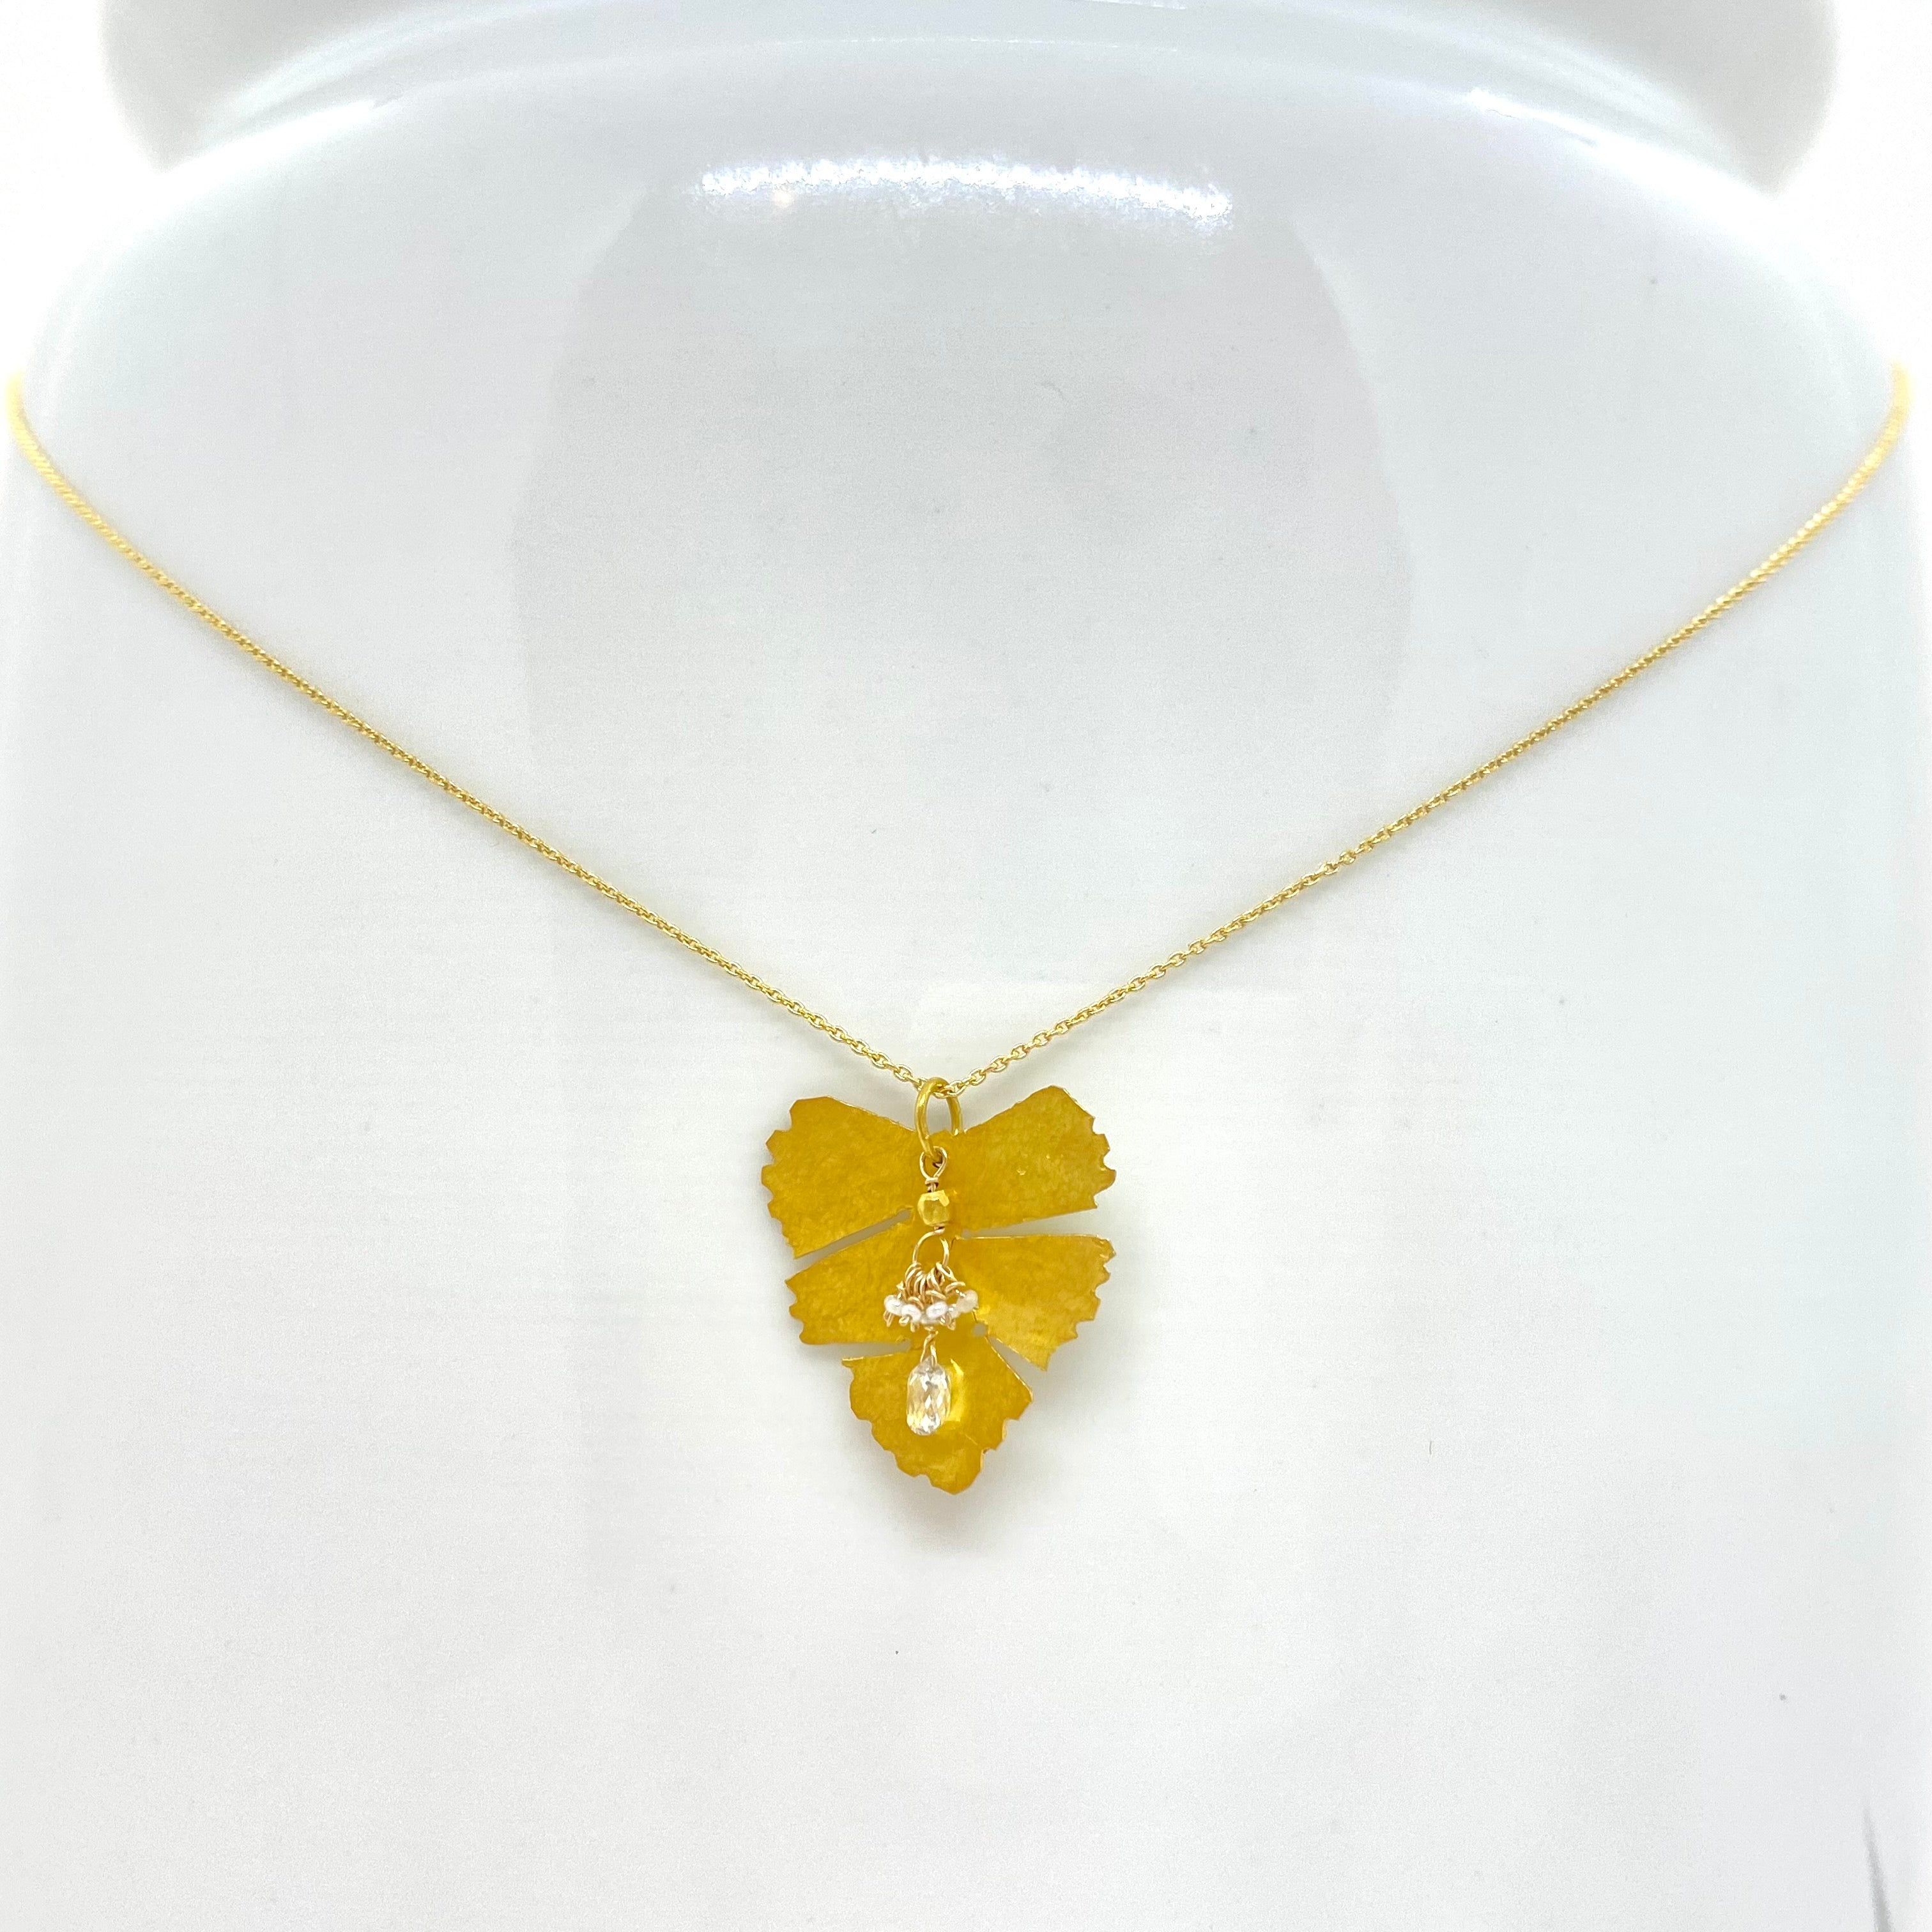 14k Gold Chain Necklace w/ Hand-Cut 18k Gold Leaf Pendant, Diamond, 18k Gold Nugget & Antique Italian Beads